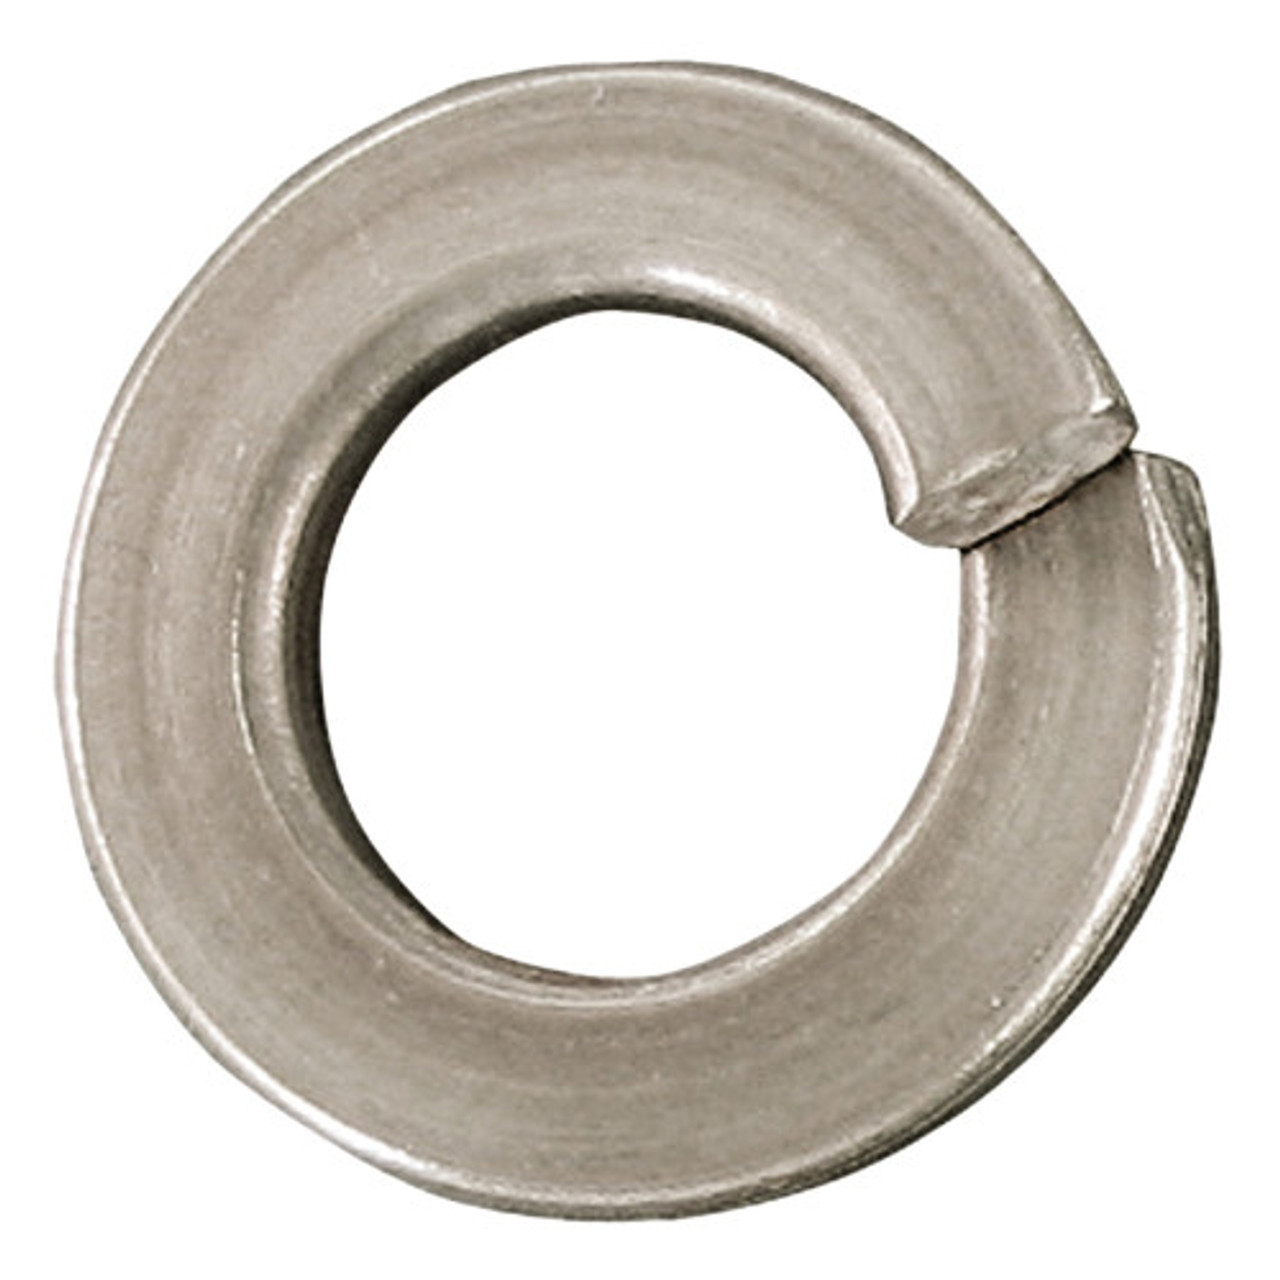 5/8" Zinc Plated Lock Washer 100 Pc.   157-024